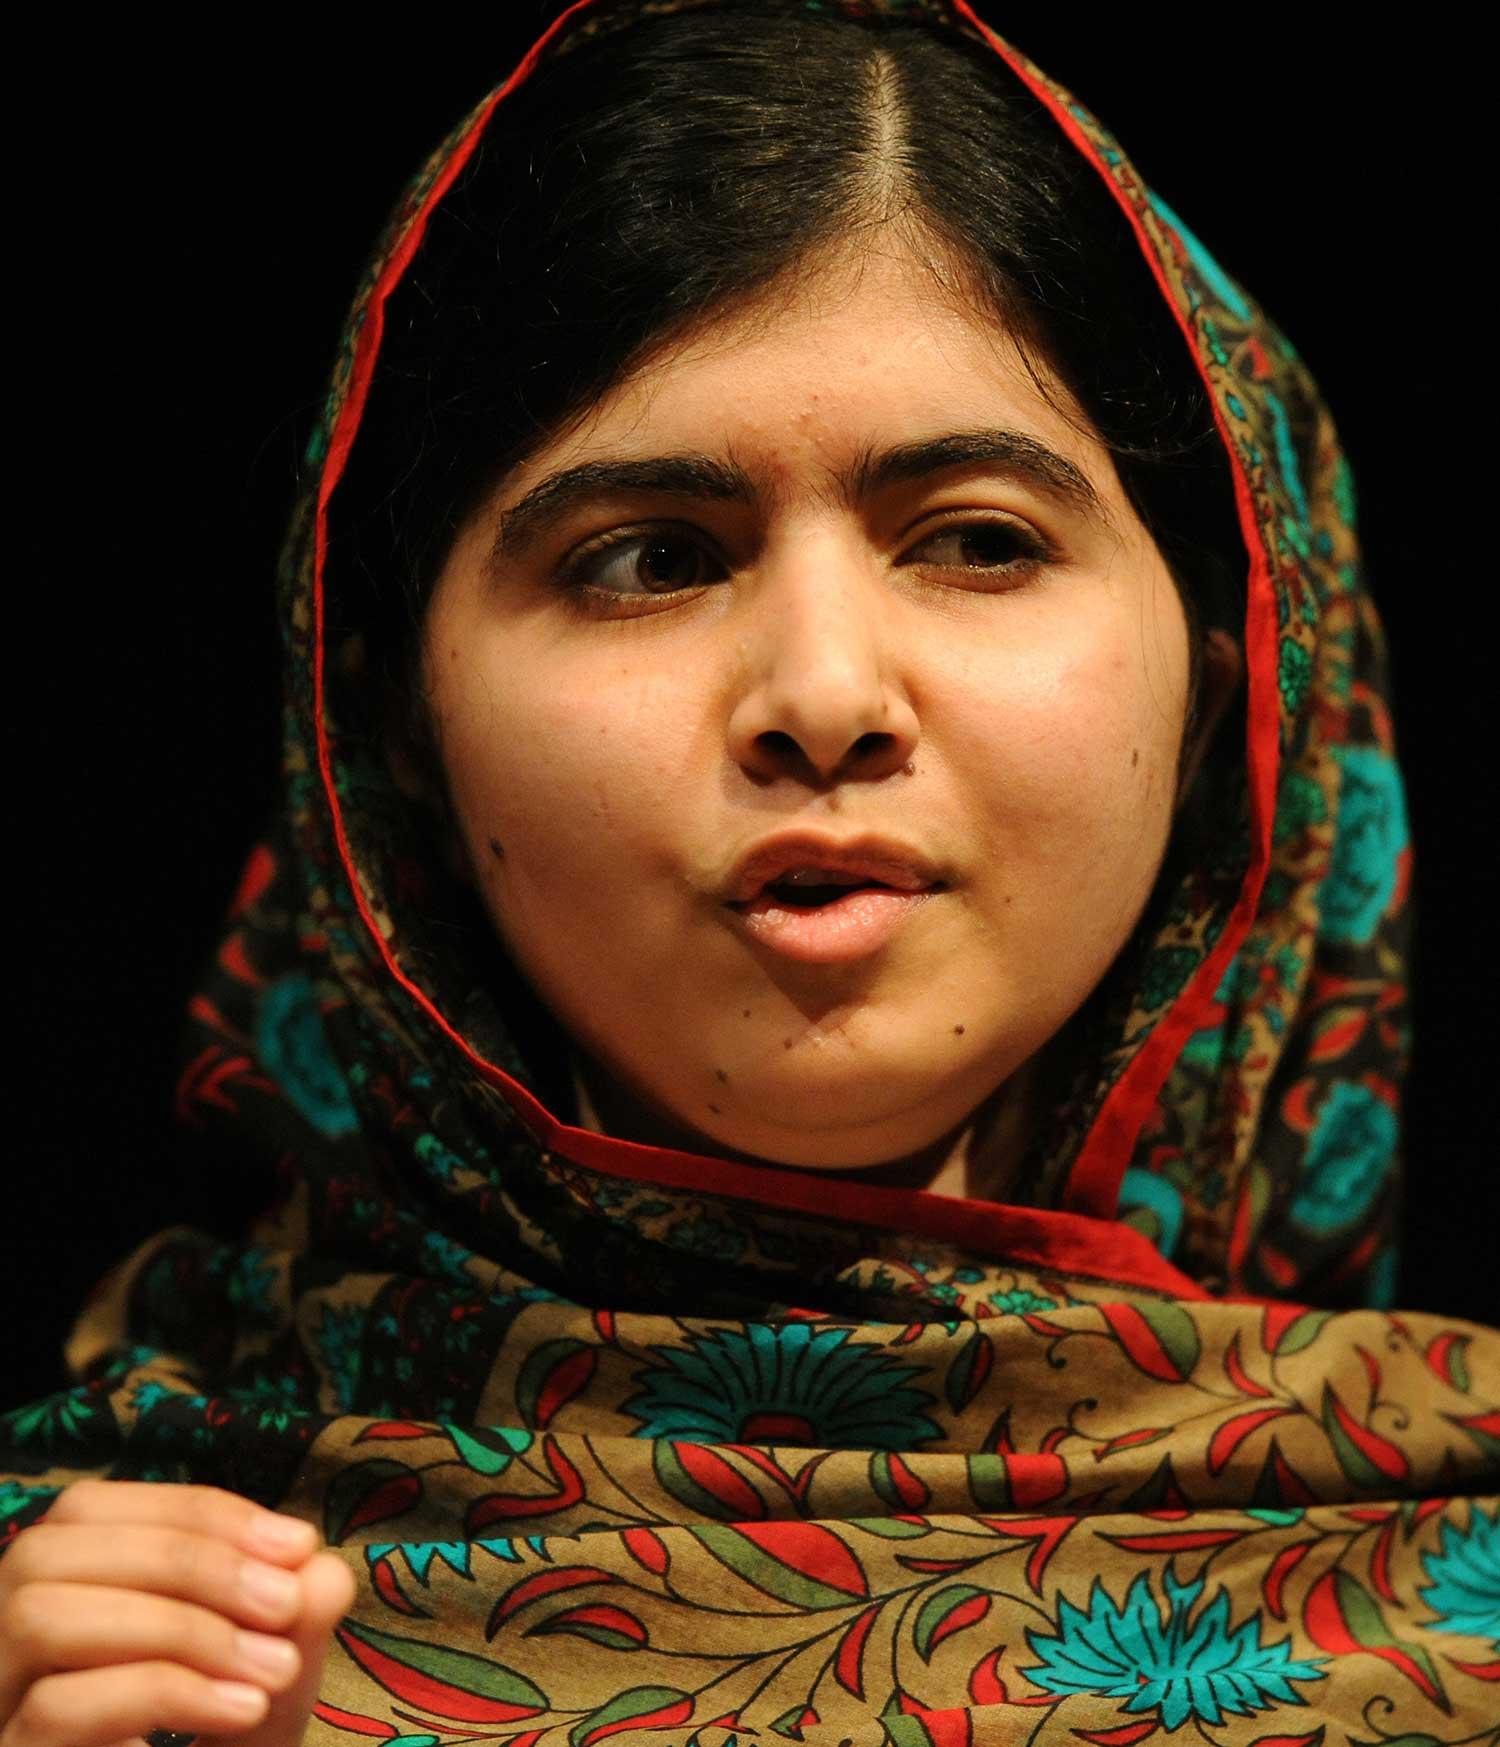 2014 års fredspristagare: Malala Yousafzai.